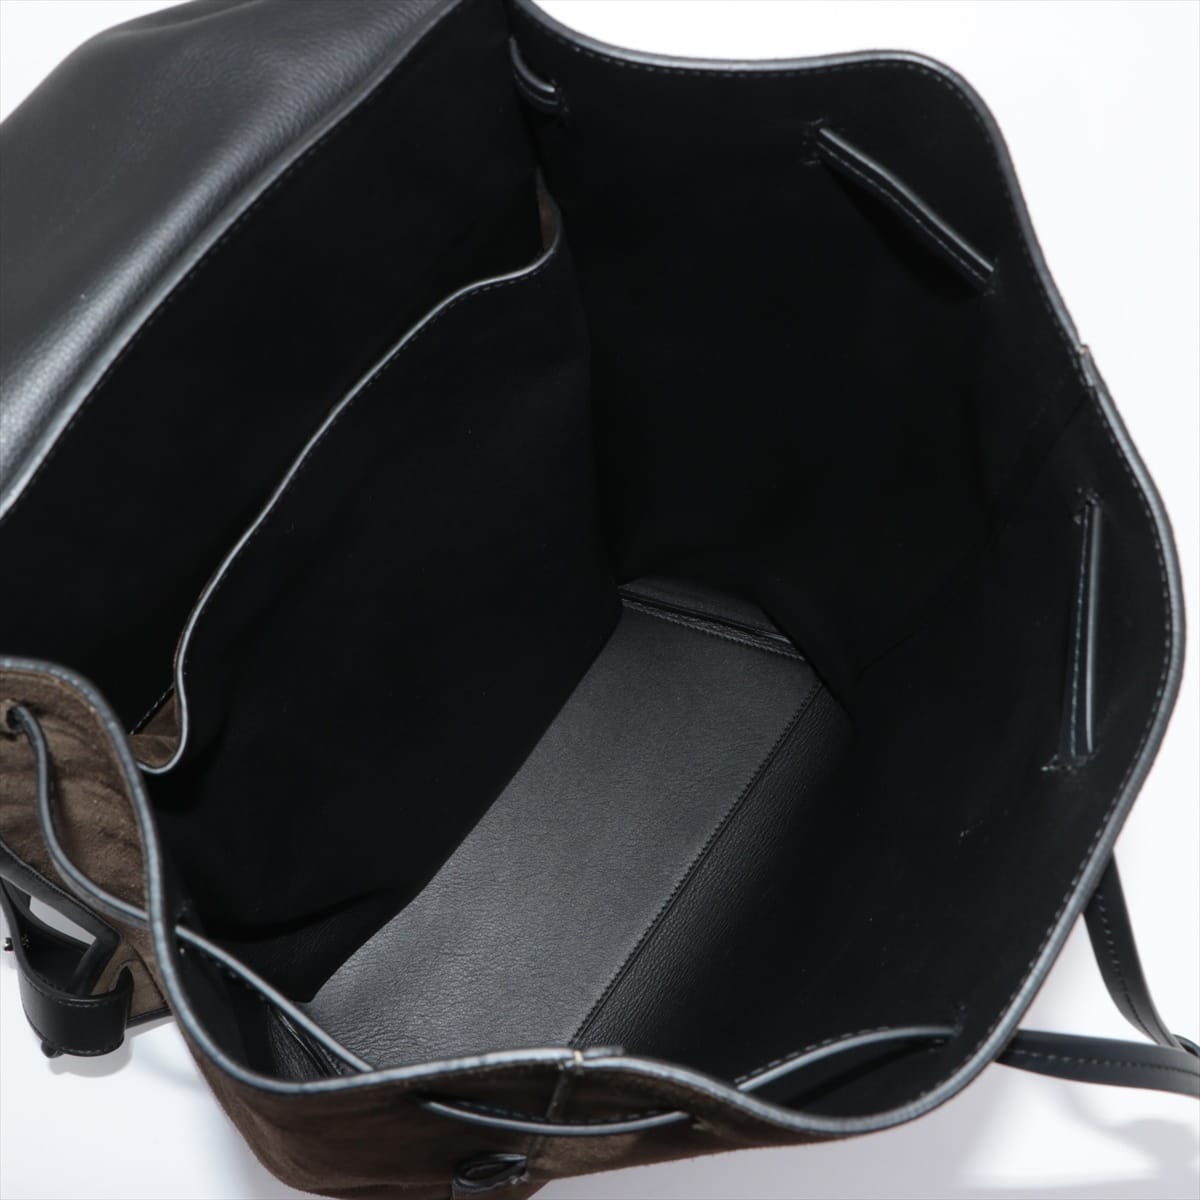 Loewe Drawstring Suede & leather Backpack Khaki